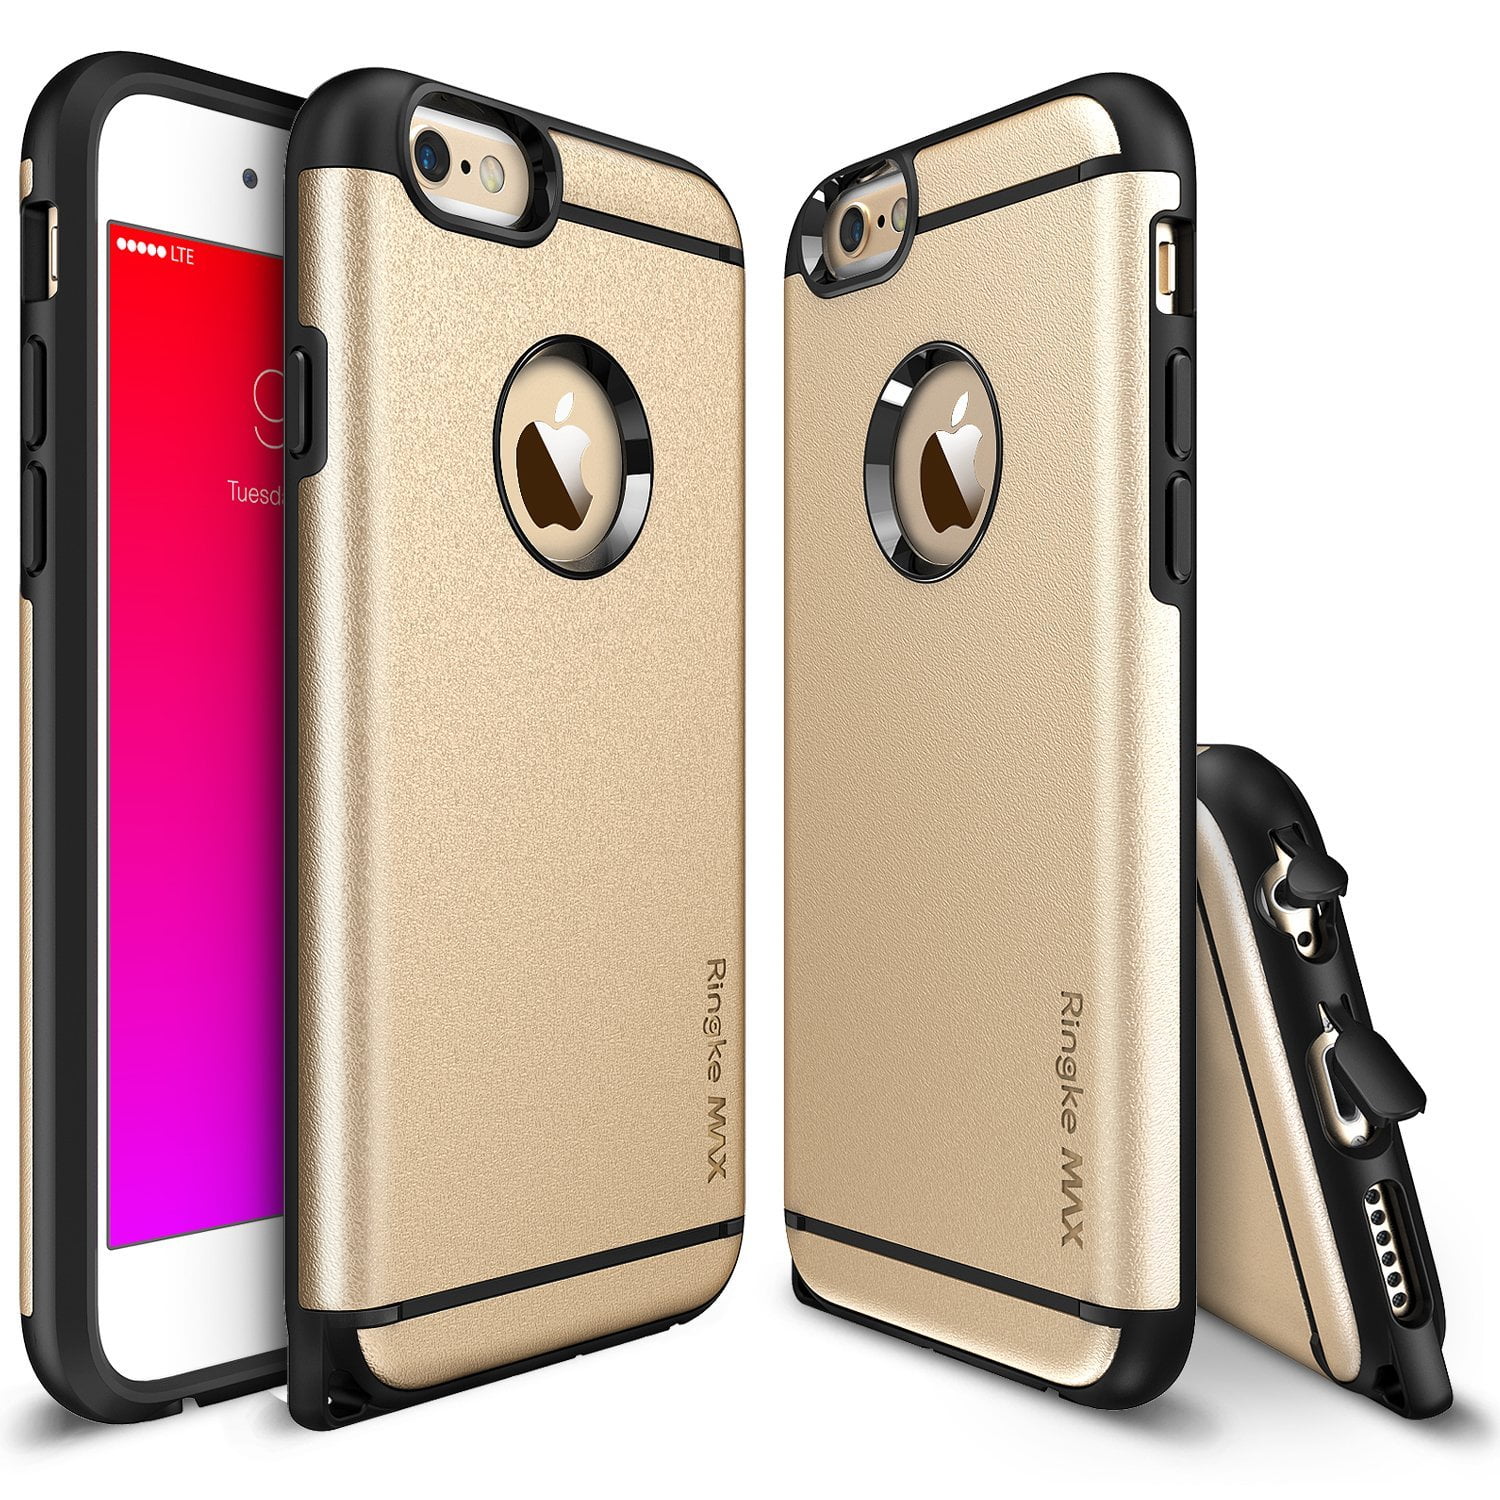 Iphone 6s Plus Case Ringke Max Iphone 6s Plus Case [free Hd Film Dust Cap]double Layer Heavy